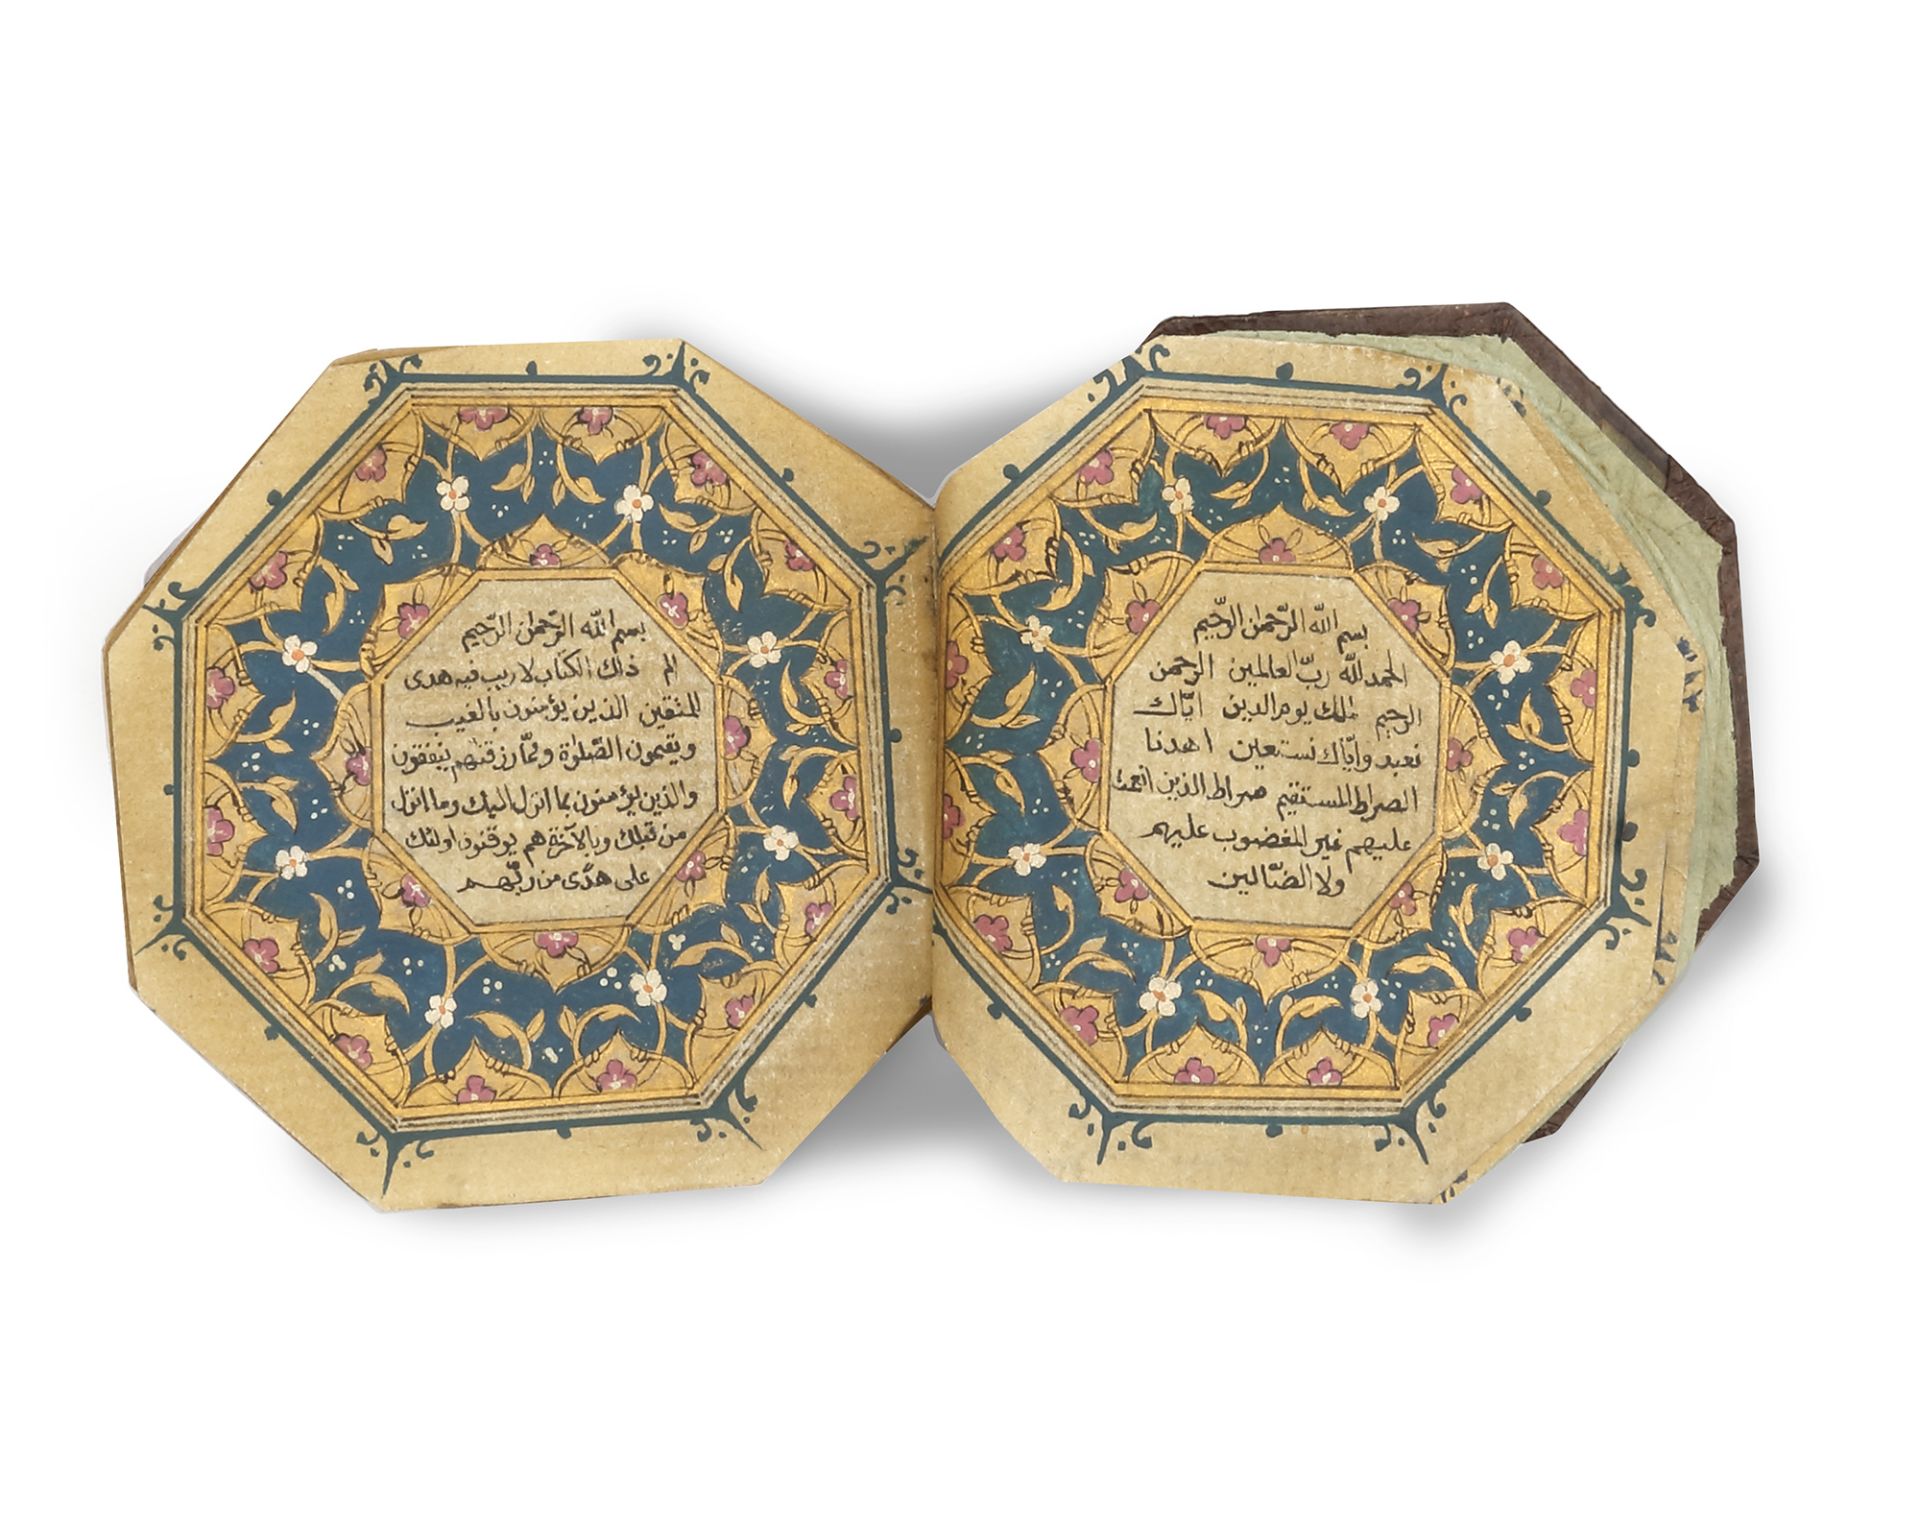 AN ILLUMINATED MINIATURE OCTAGONAL QURAN WRITTEN BY MUHAMMED AL-KHALAWI, TURKEY DATED 1213 AH/1798 A